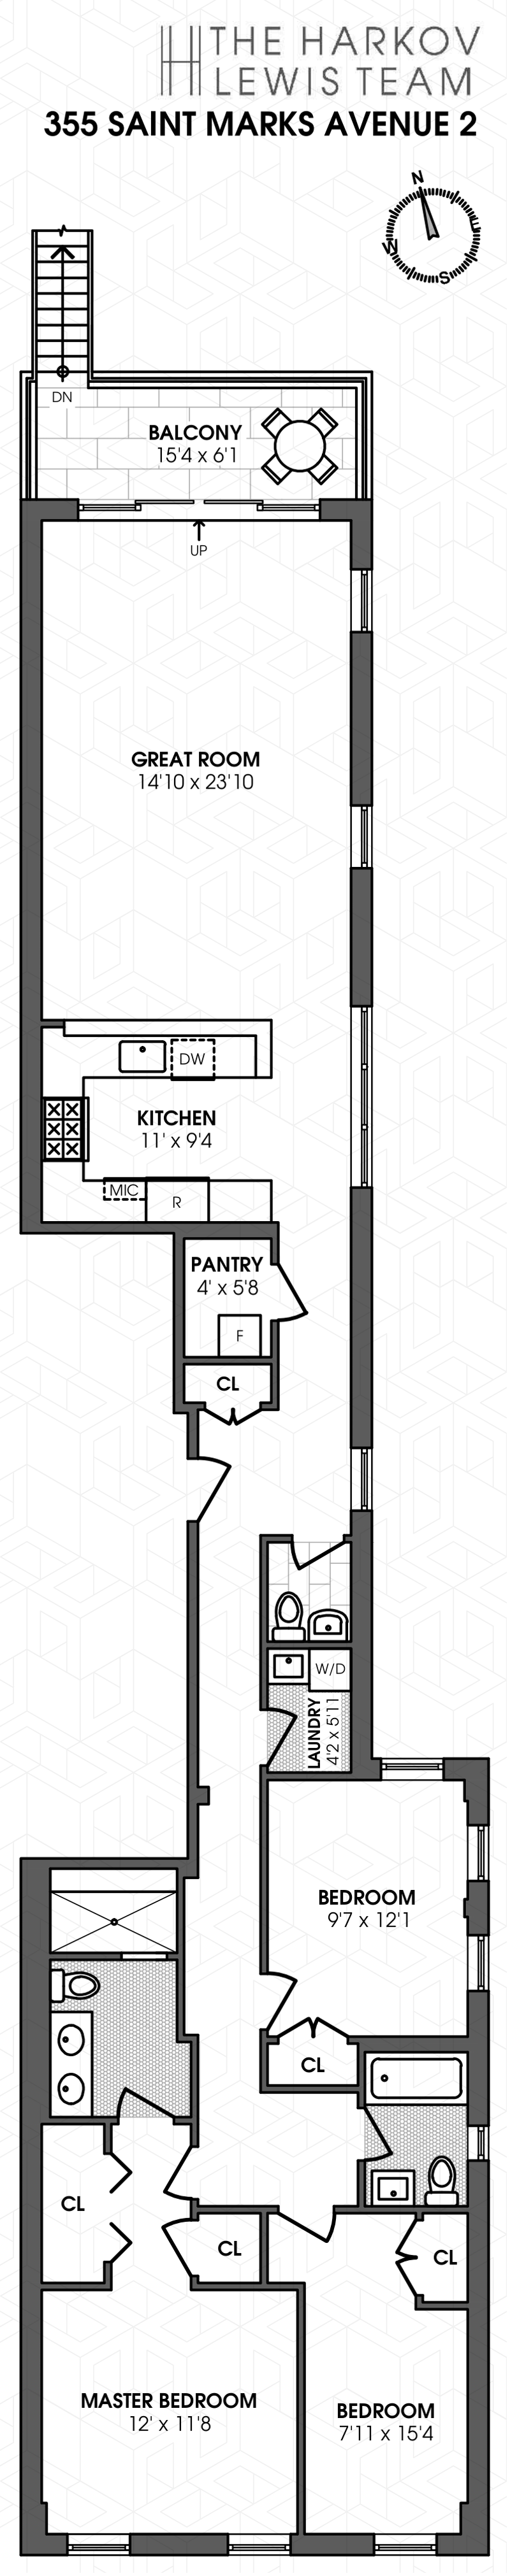 Floorplan for 355 St Marks Avenue, 2